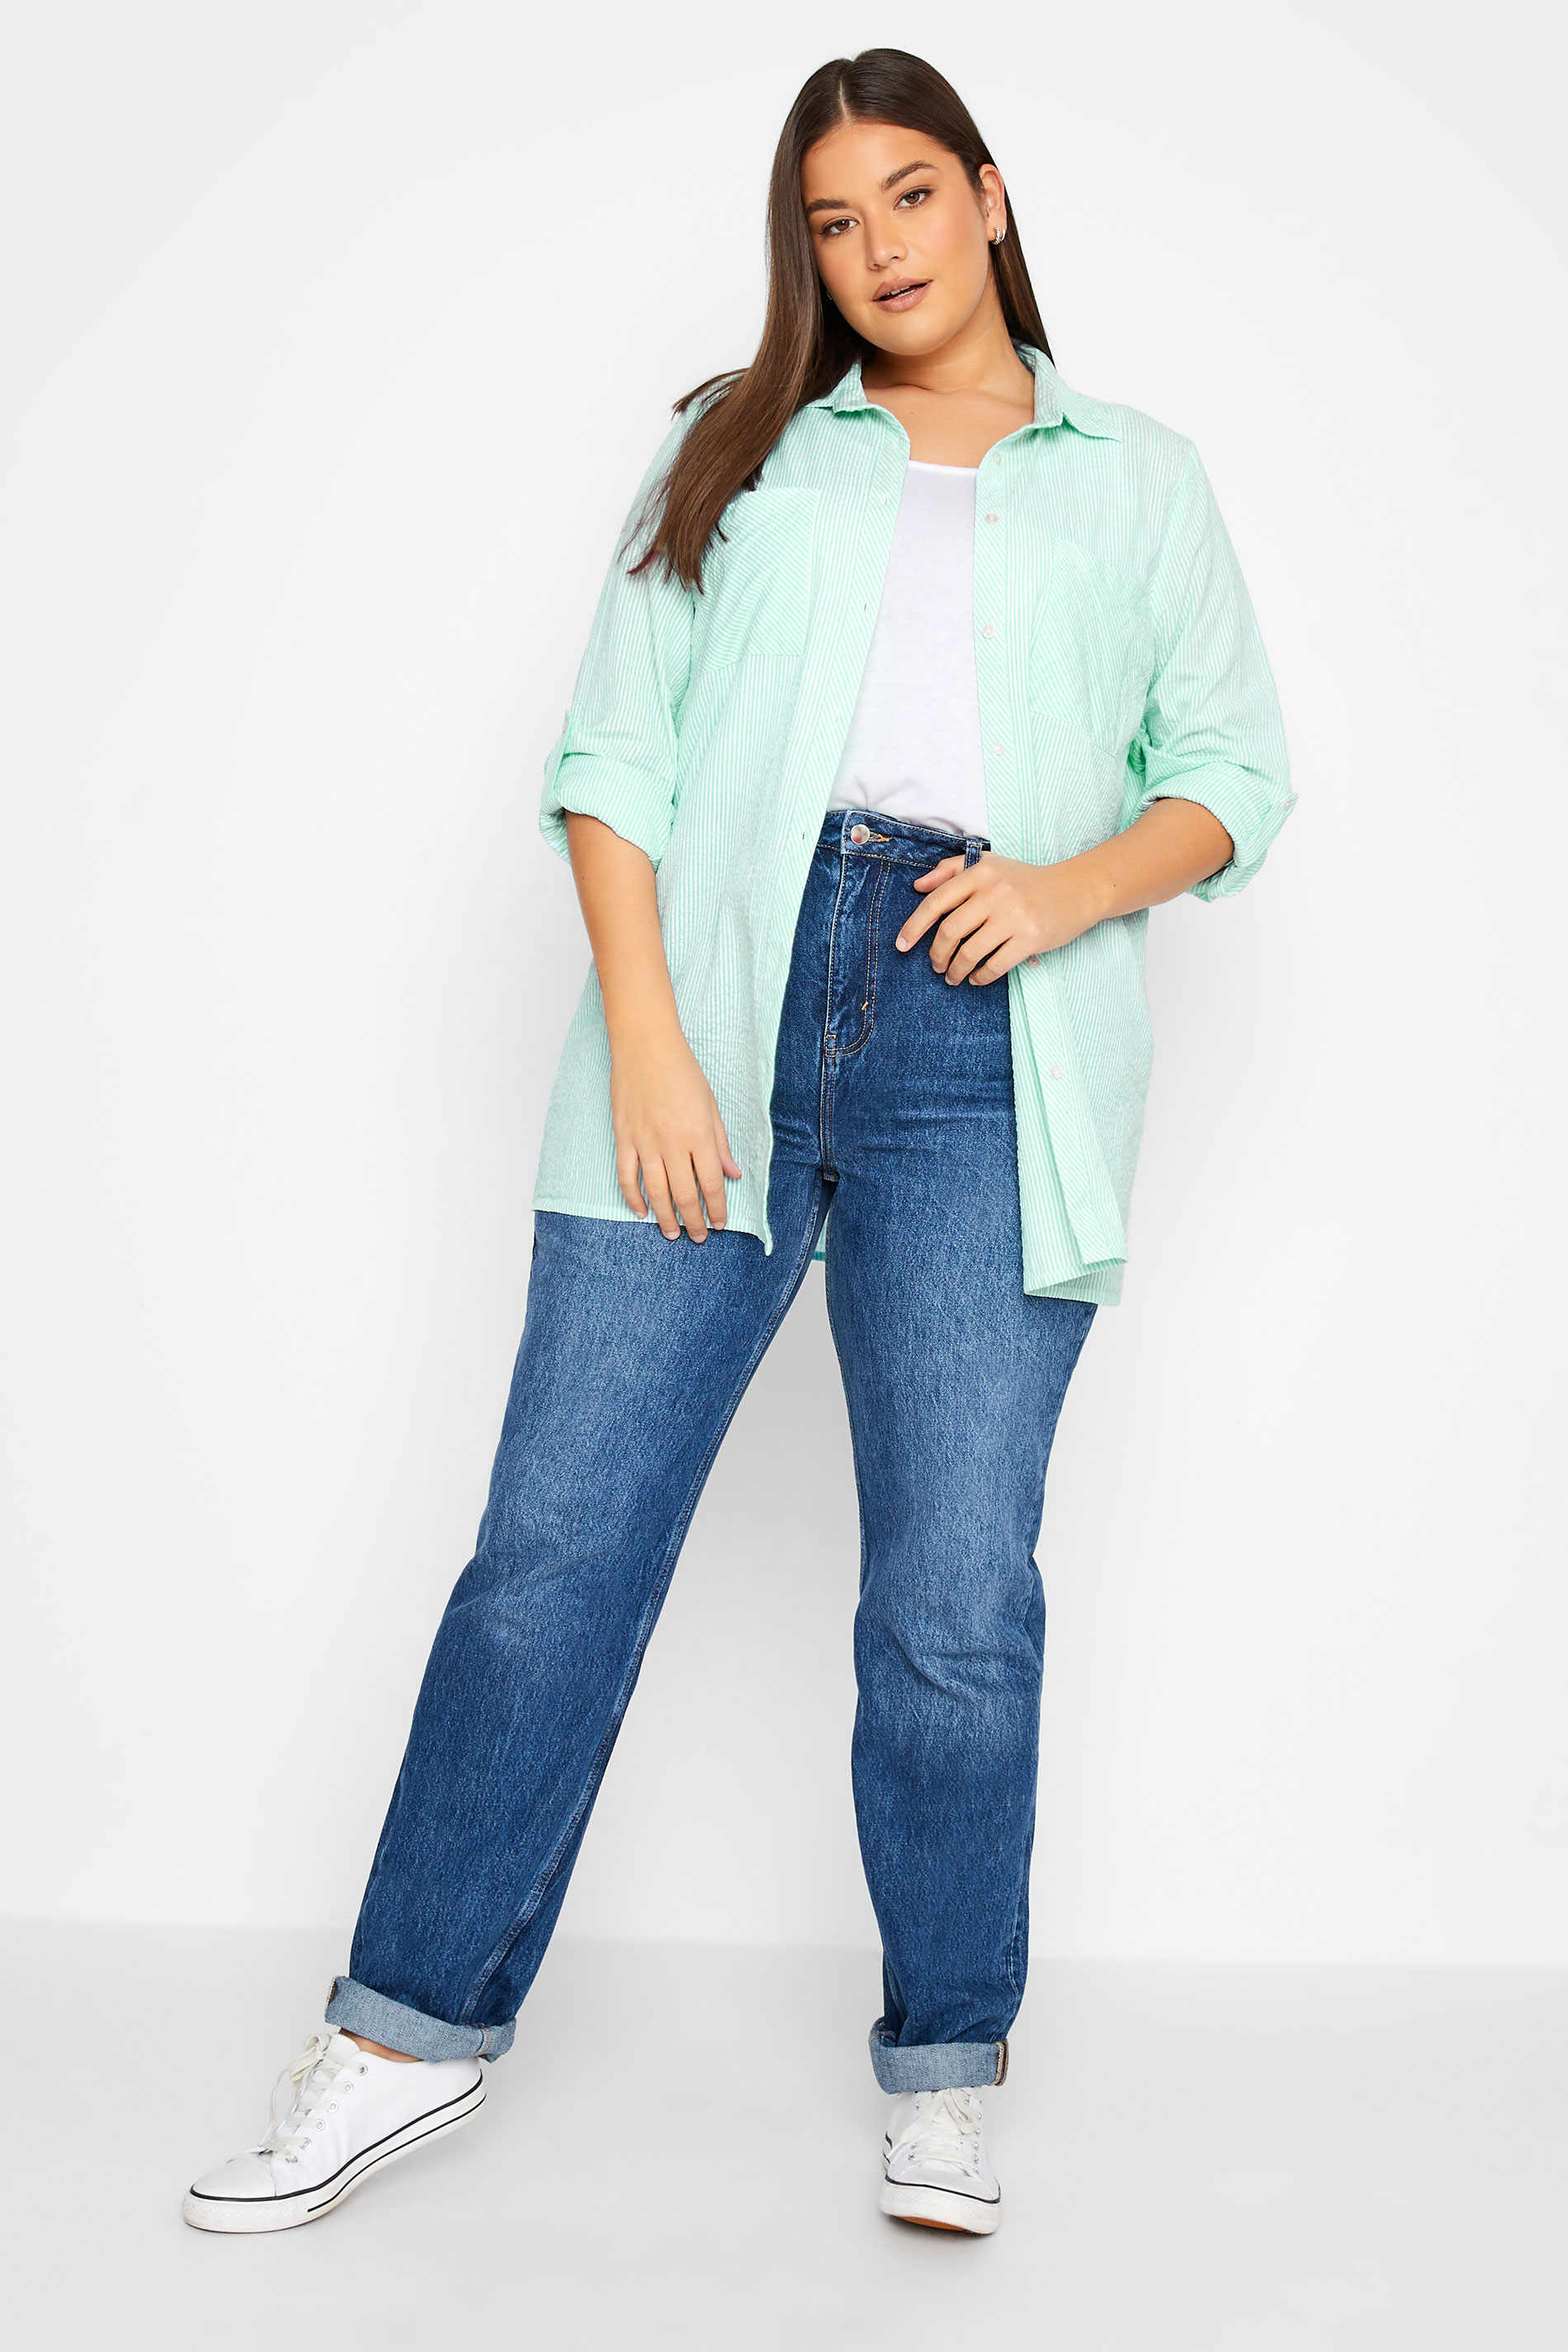 Tall Women's LTS Turquoise Green Stripe Shirt | Long Tall Sally  2